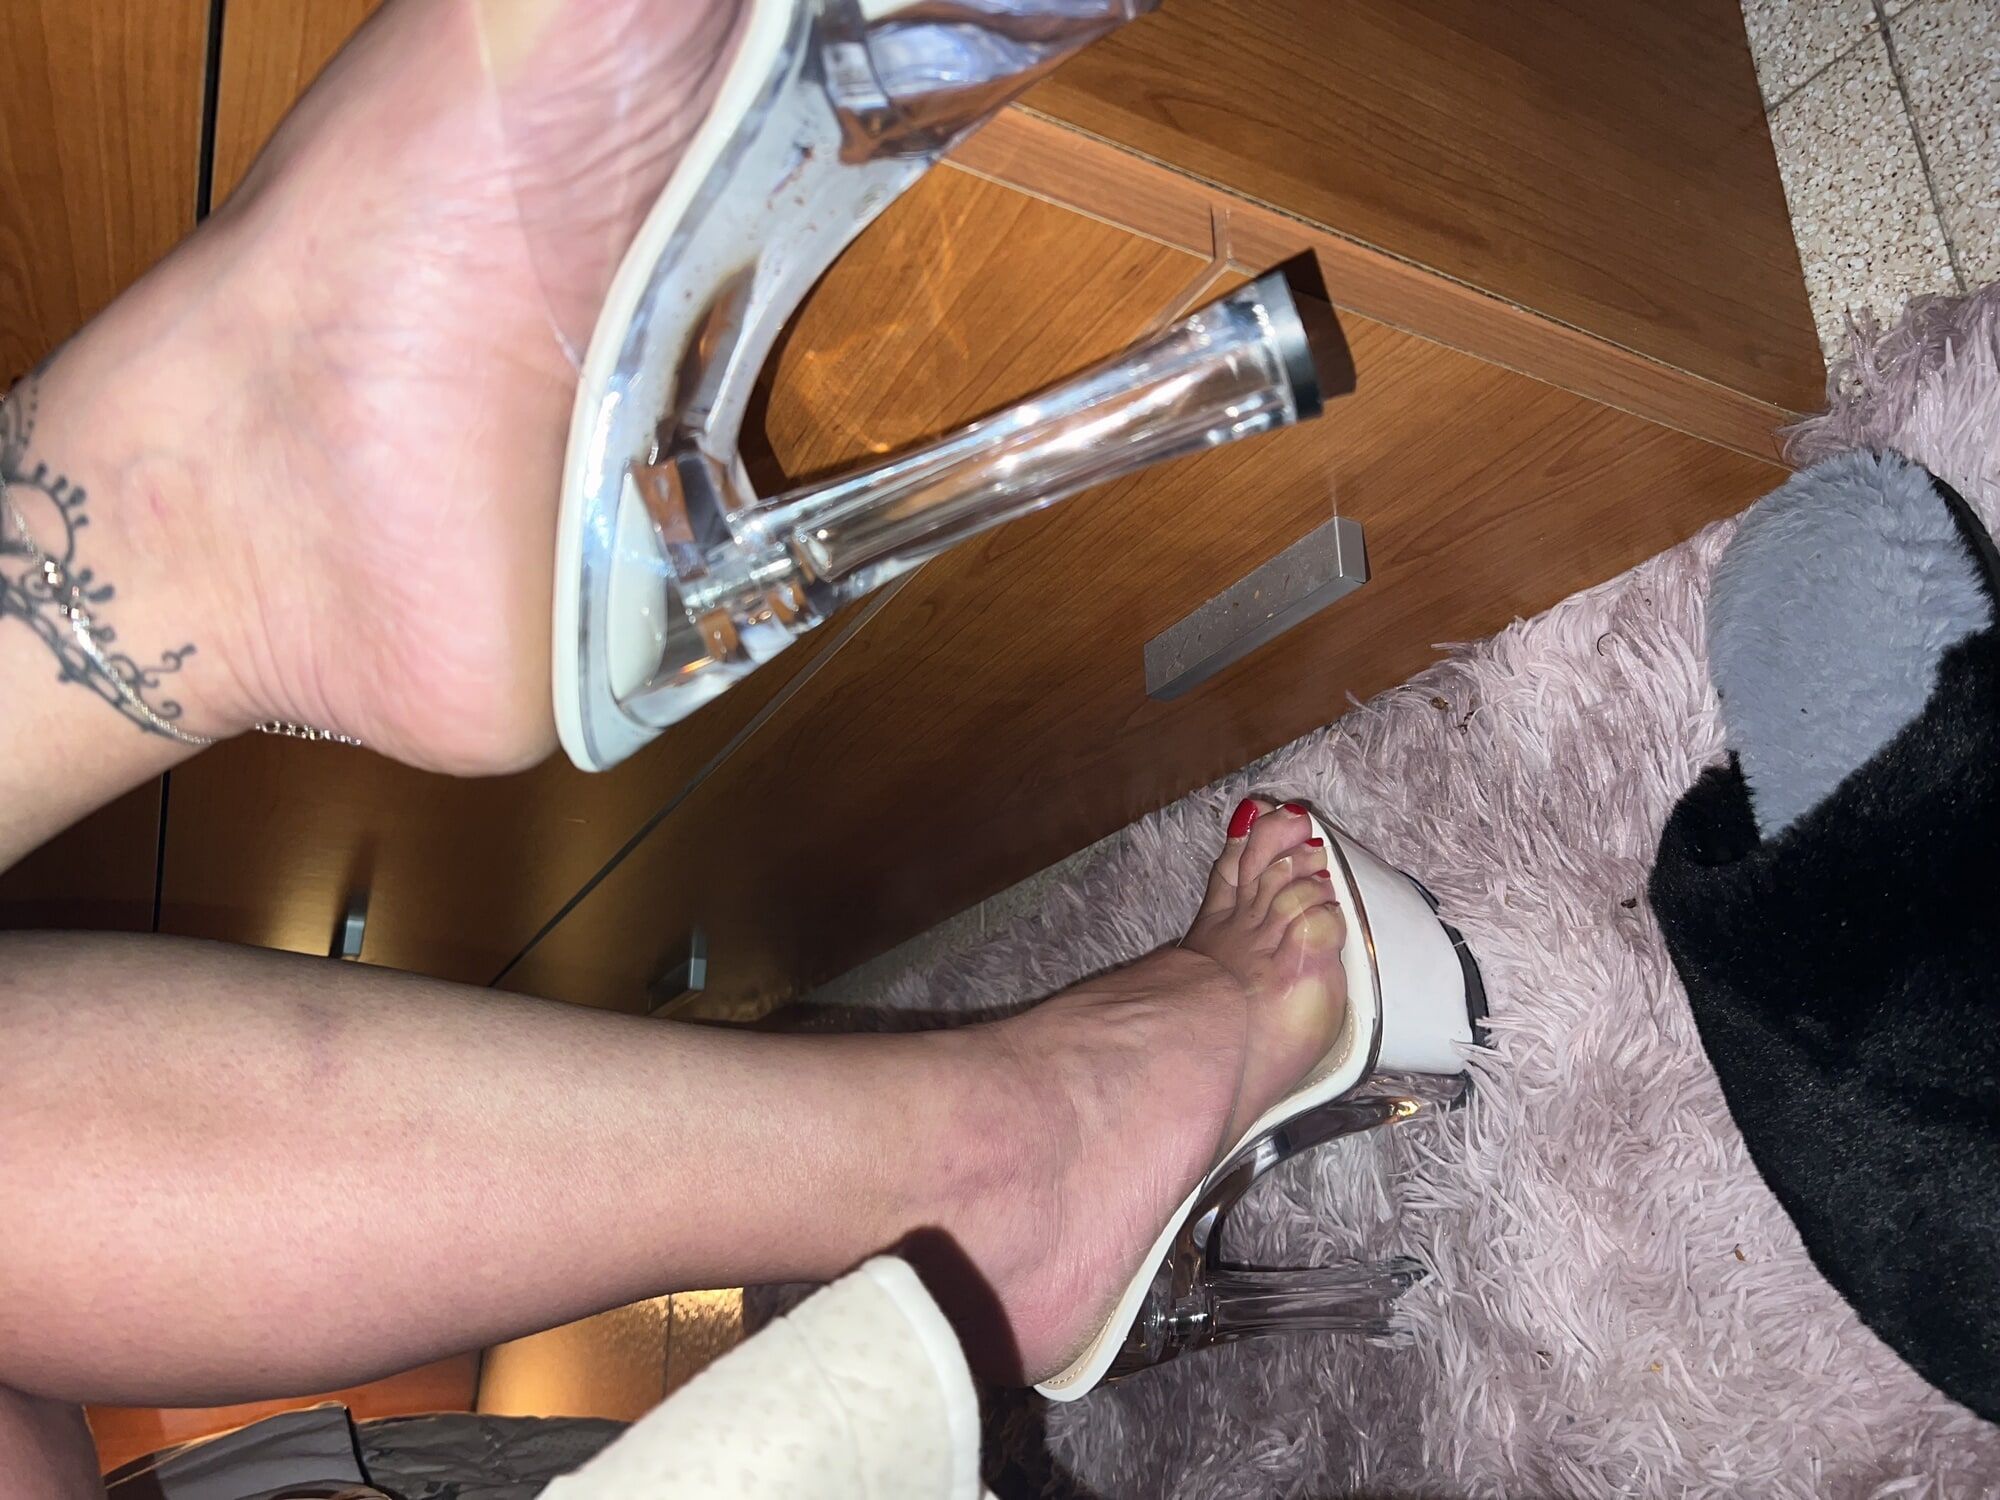 My wife sexy feet #20